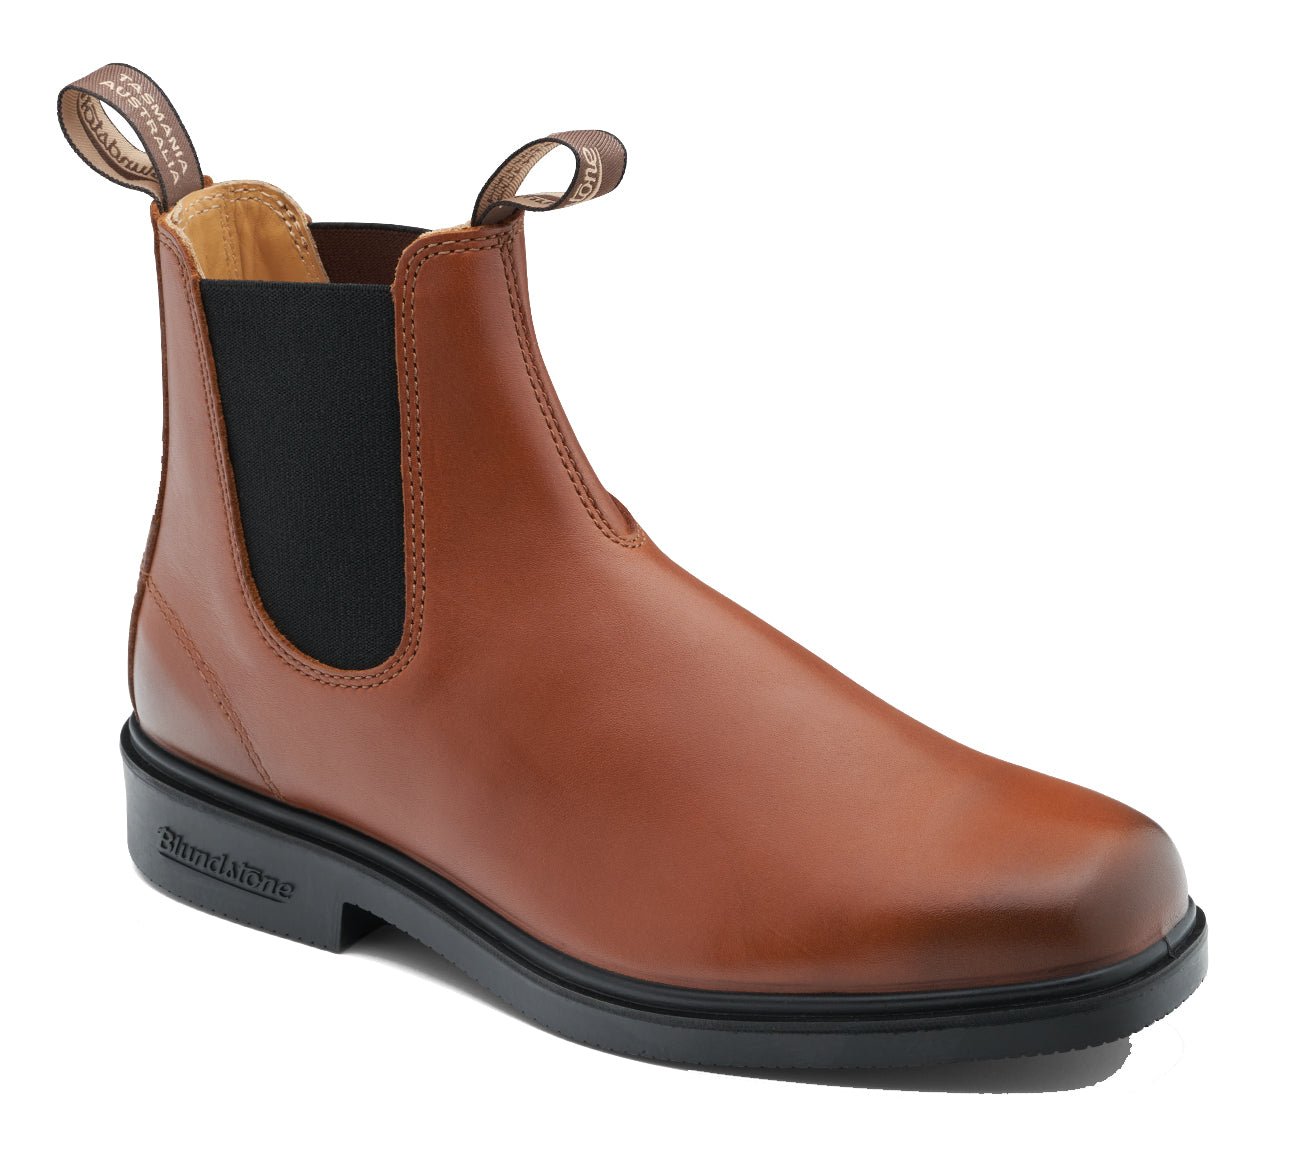 Blundstone 2244 Dress Boot Cognac - Grady’s Feet Essentials - Blundstone